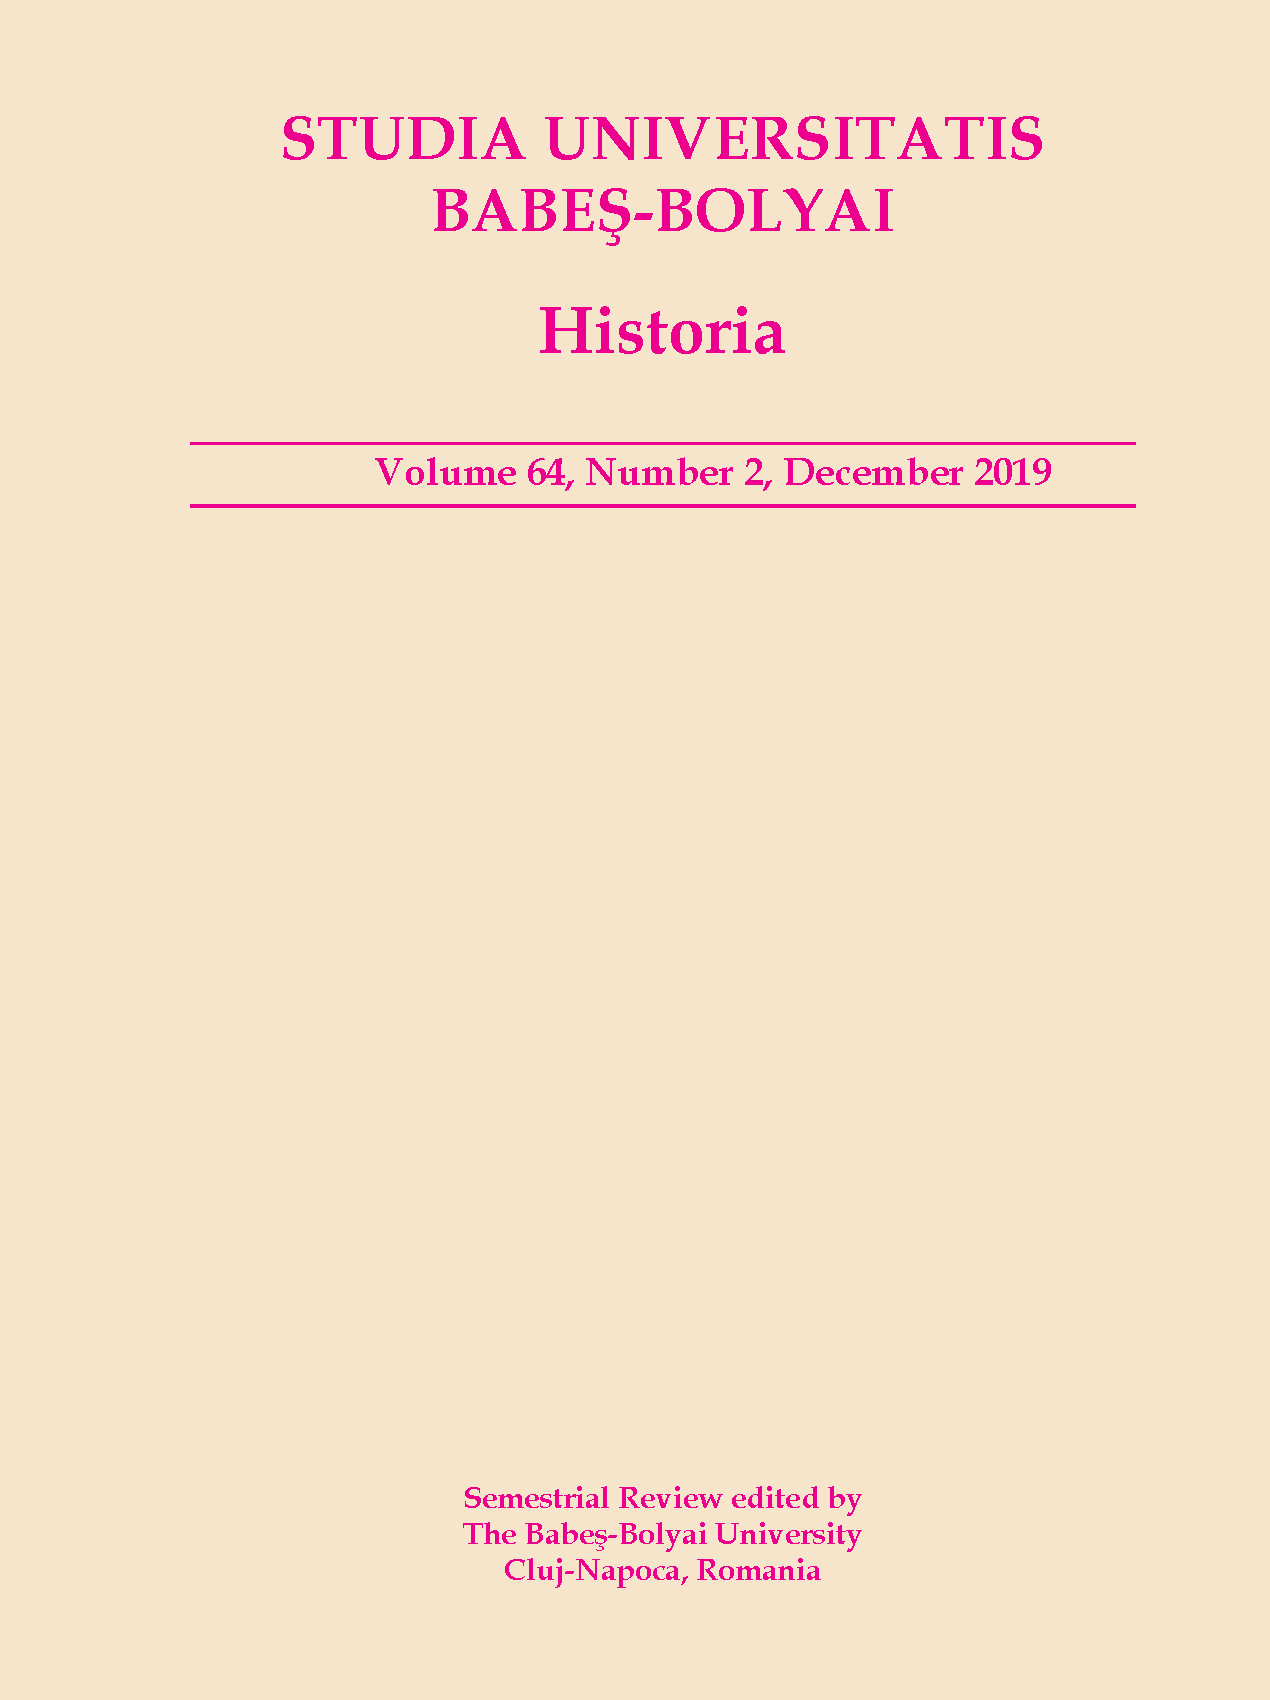 STUDIA UBB HISTORIA, Volume 64 (LXIV), No. 2, December 2019